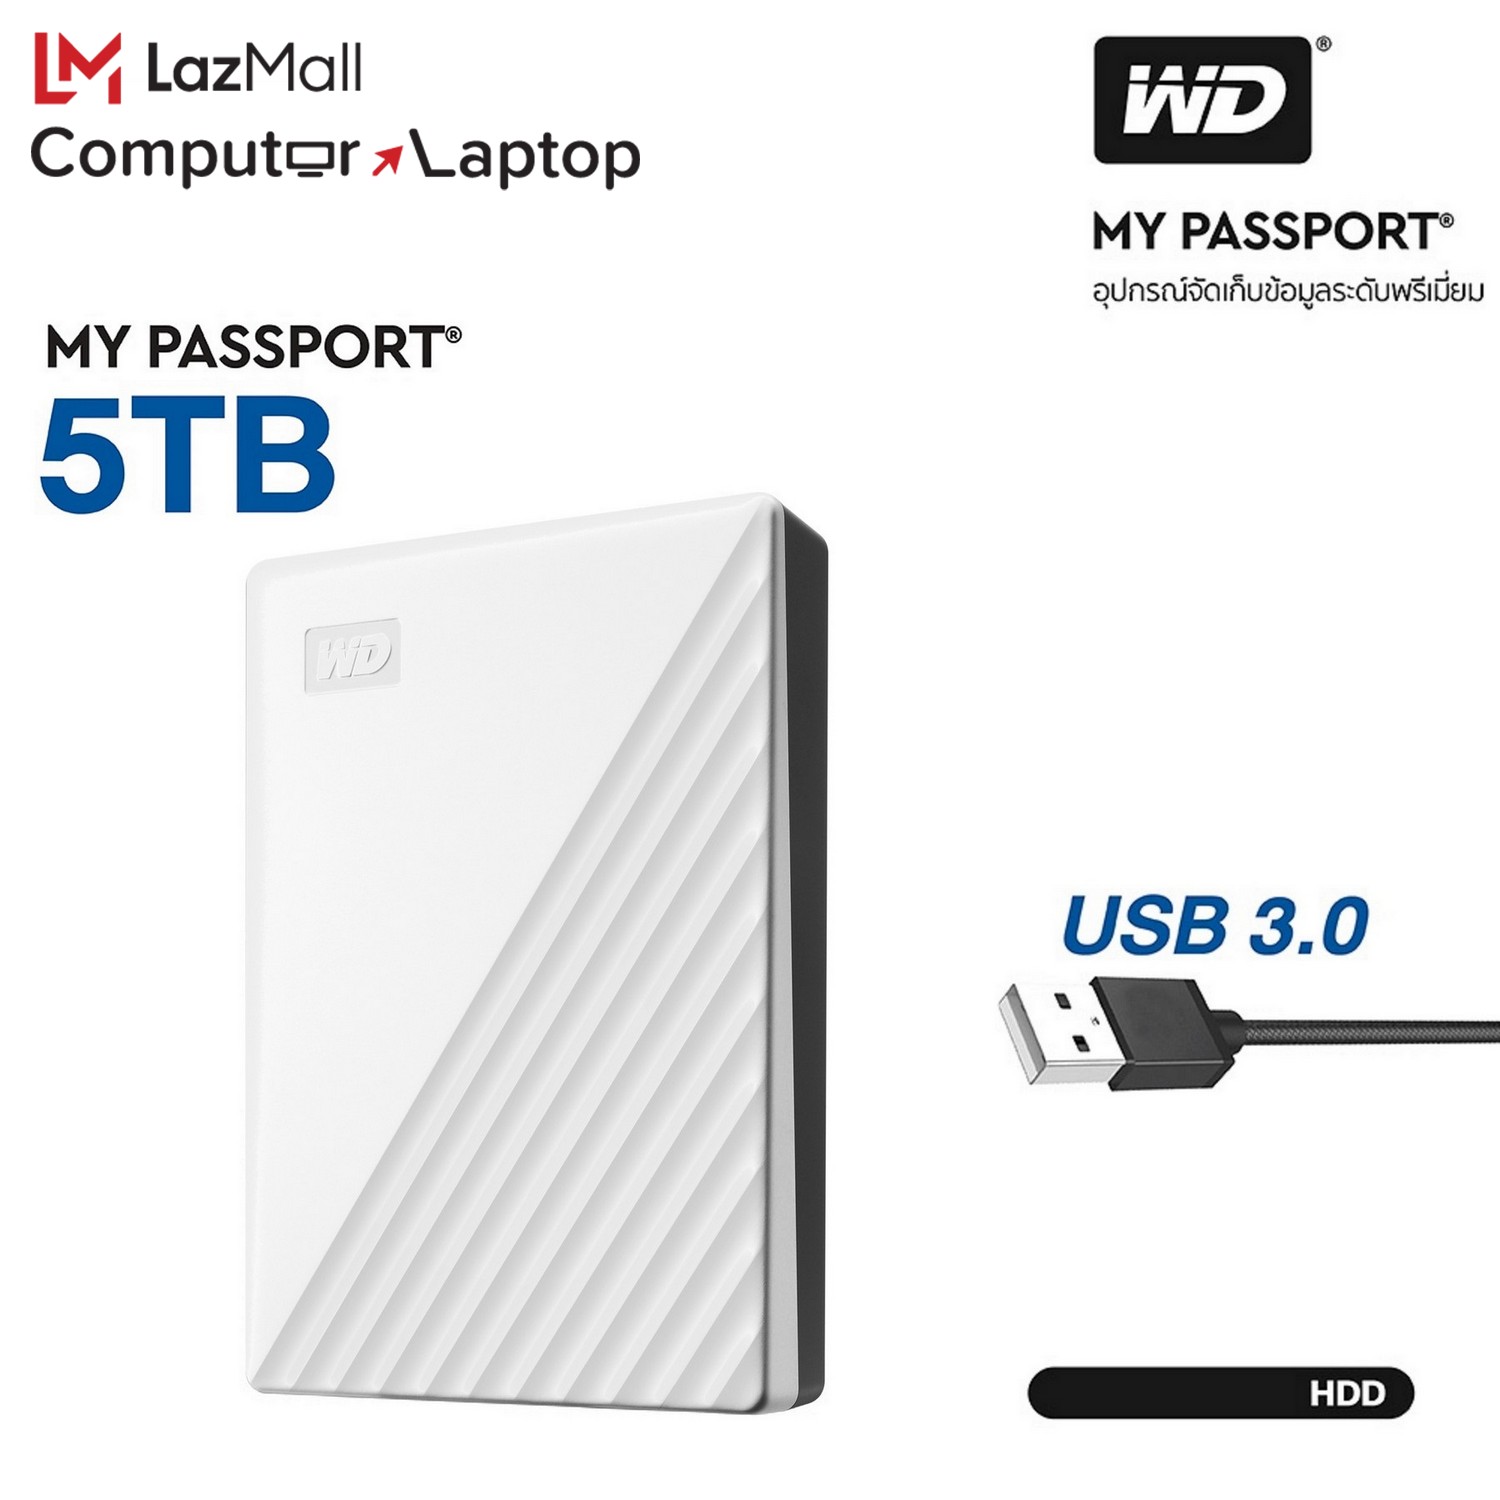 WD My Passport 5TB, White, USB 3.0, HDD 2.5